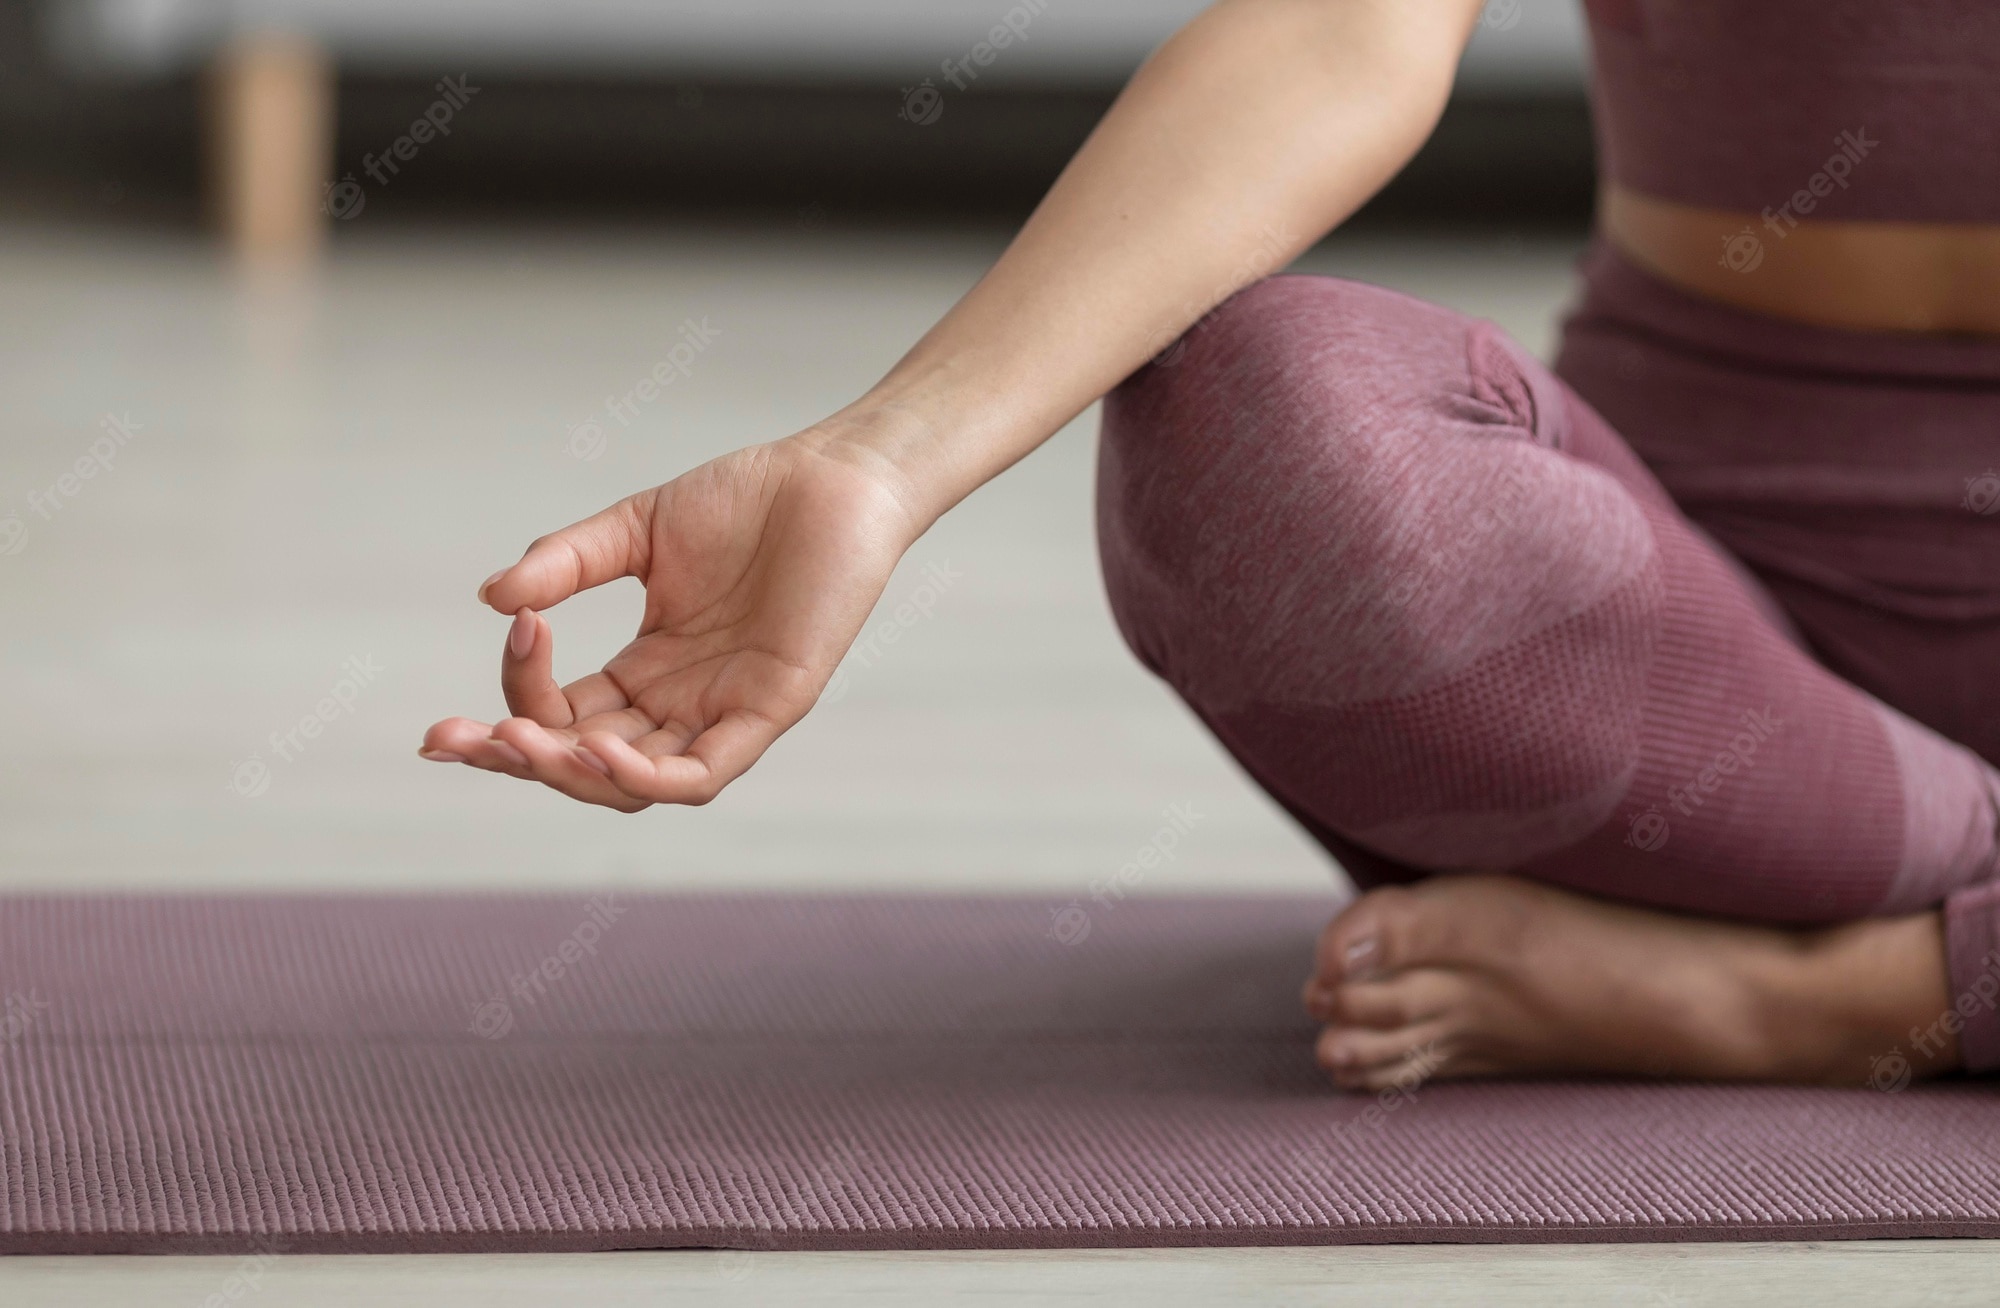 5 Methods to Make The Own Yoga Mat: Your DIY Yoga Mat Tutorial post thumbnail image